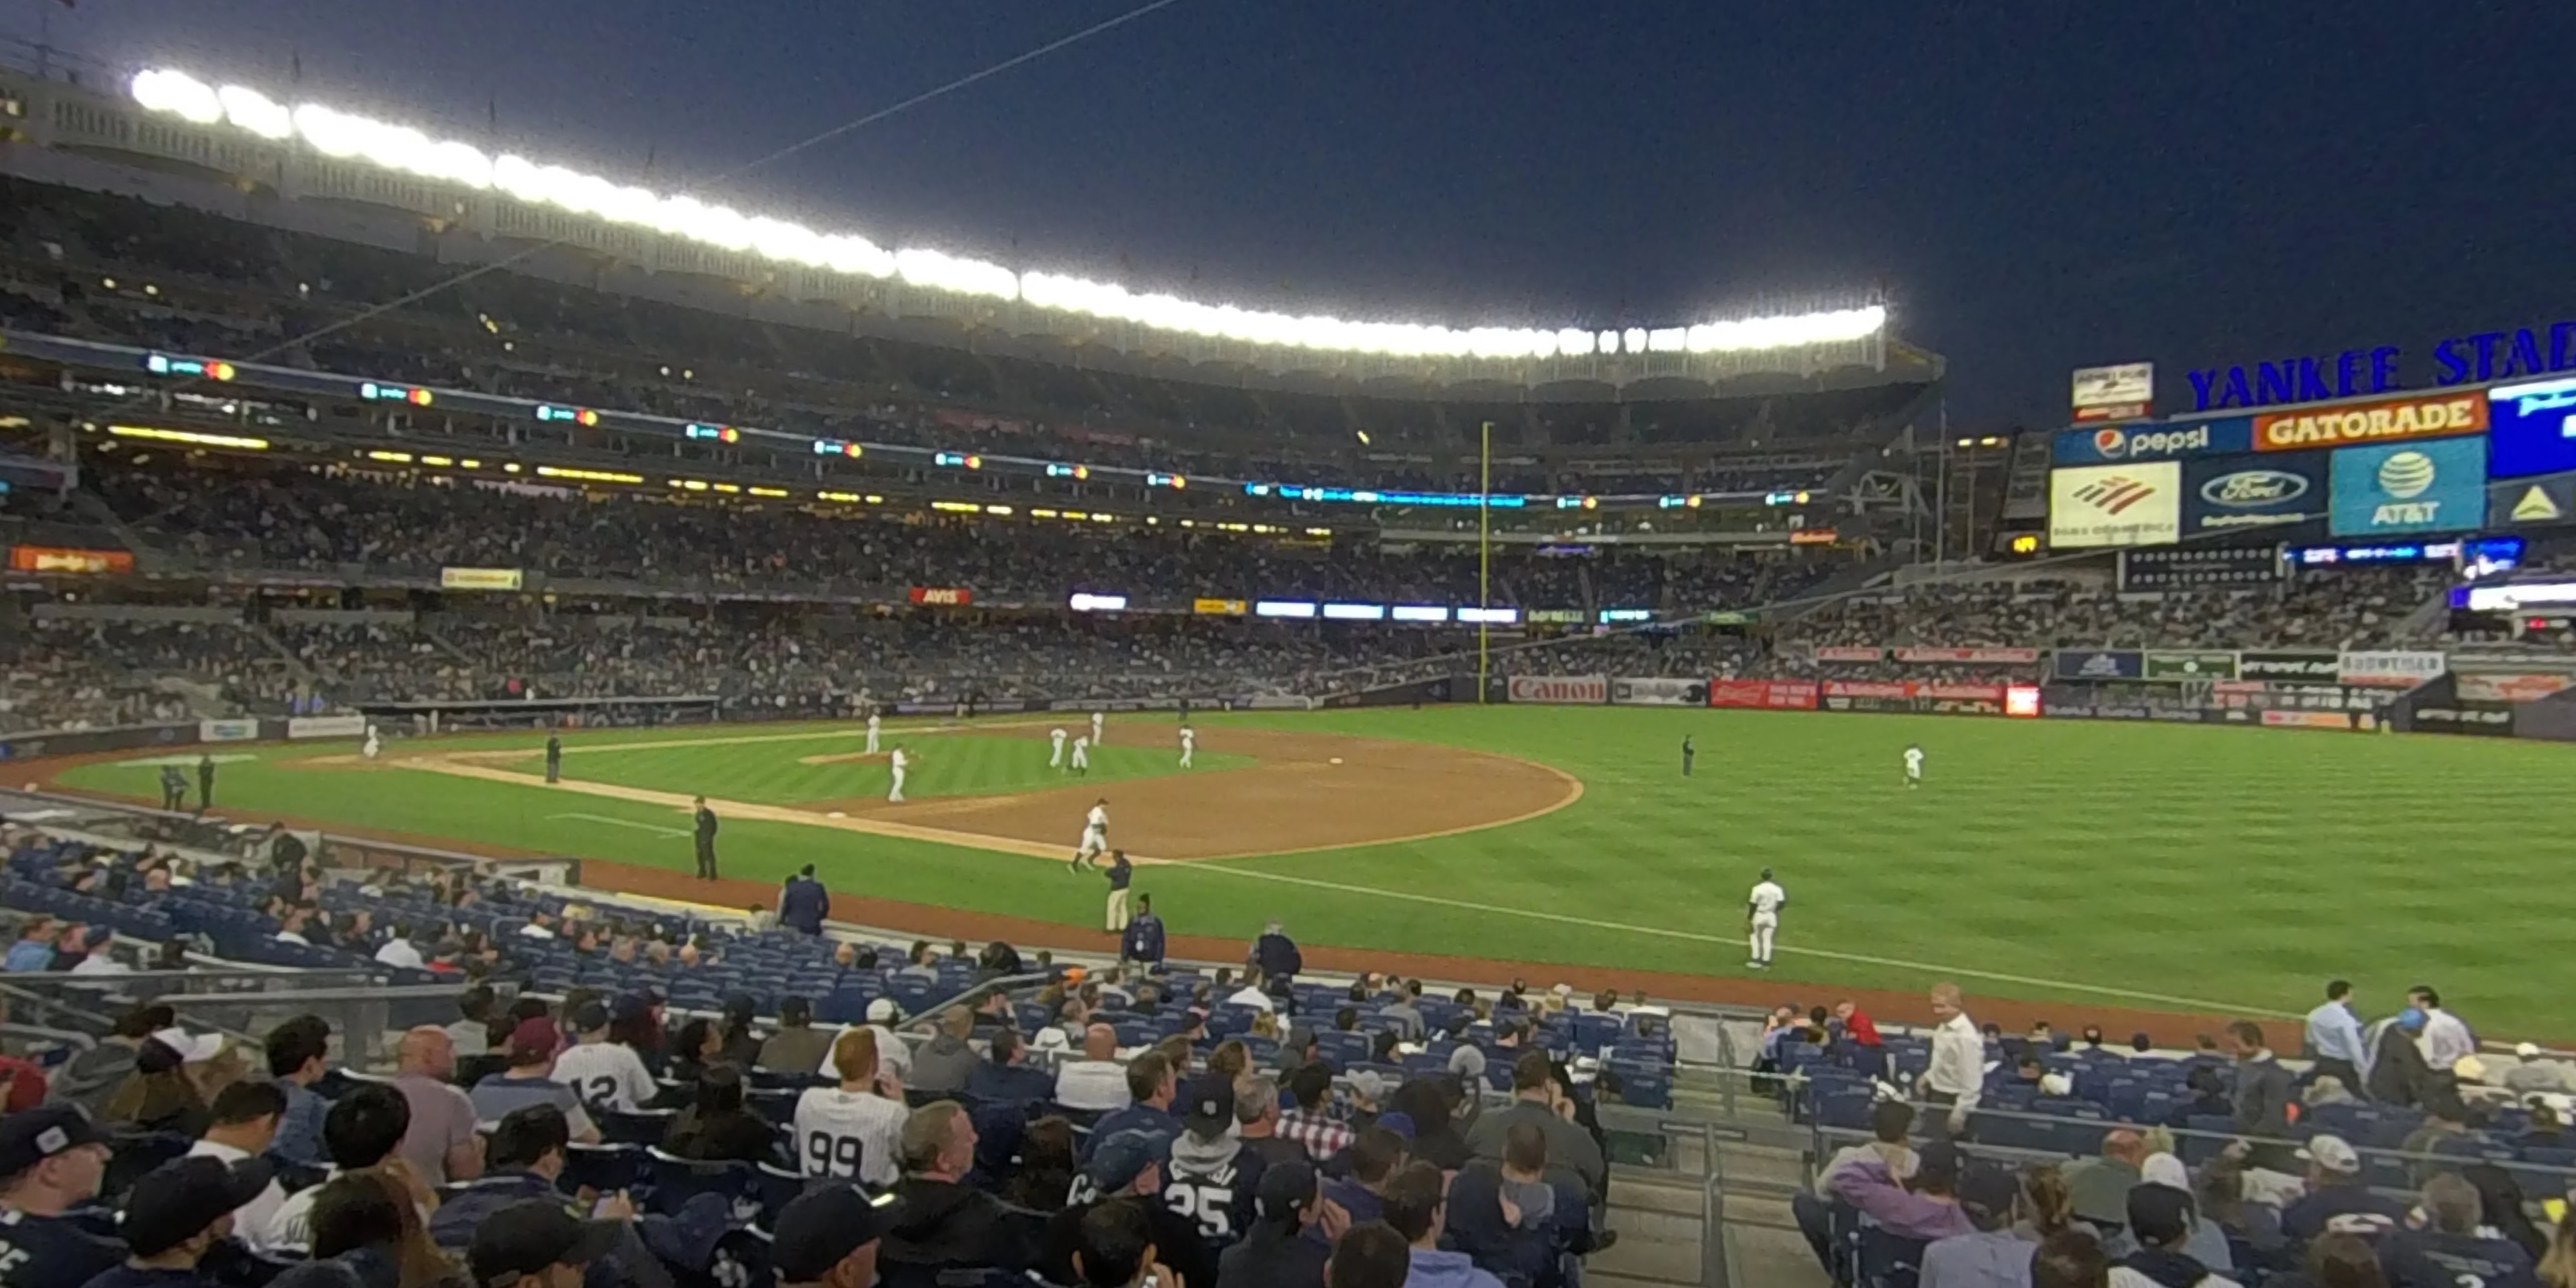 section 112 panoramic seat view  for baseball - yankee stadium